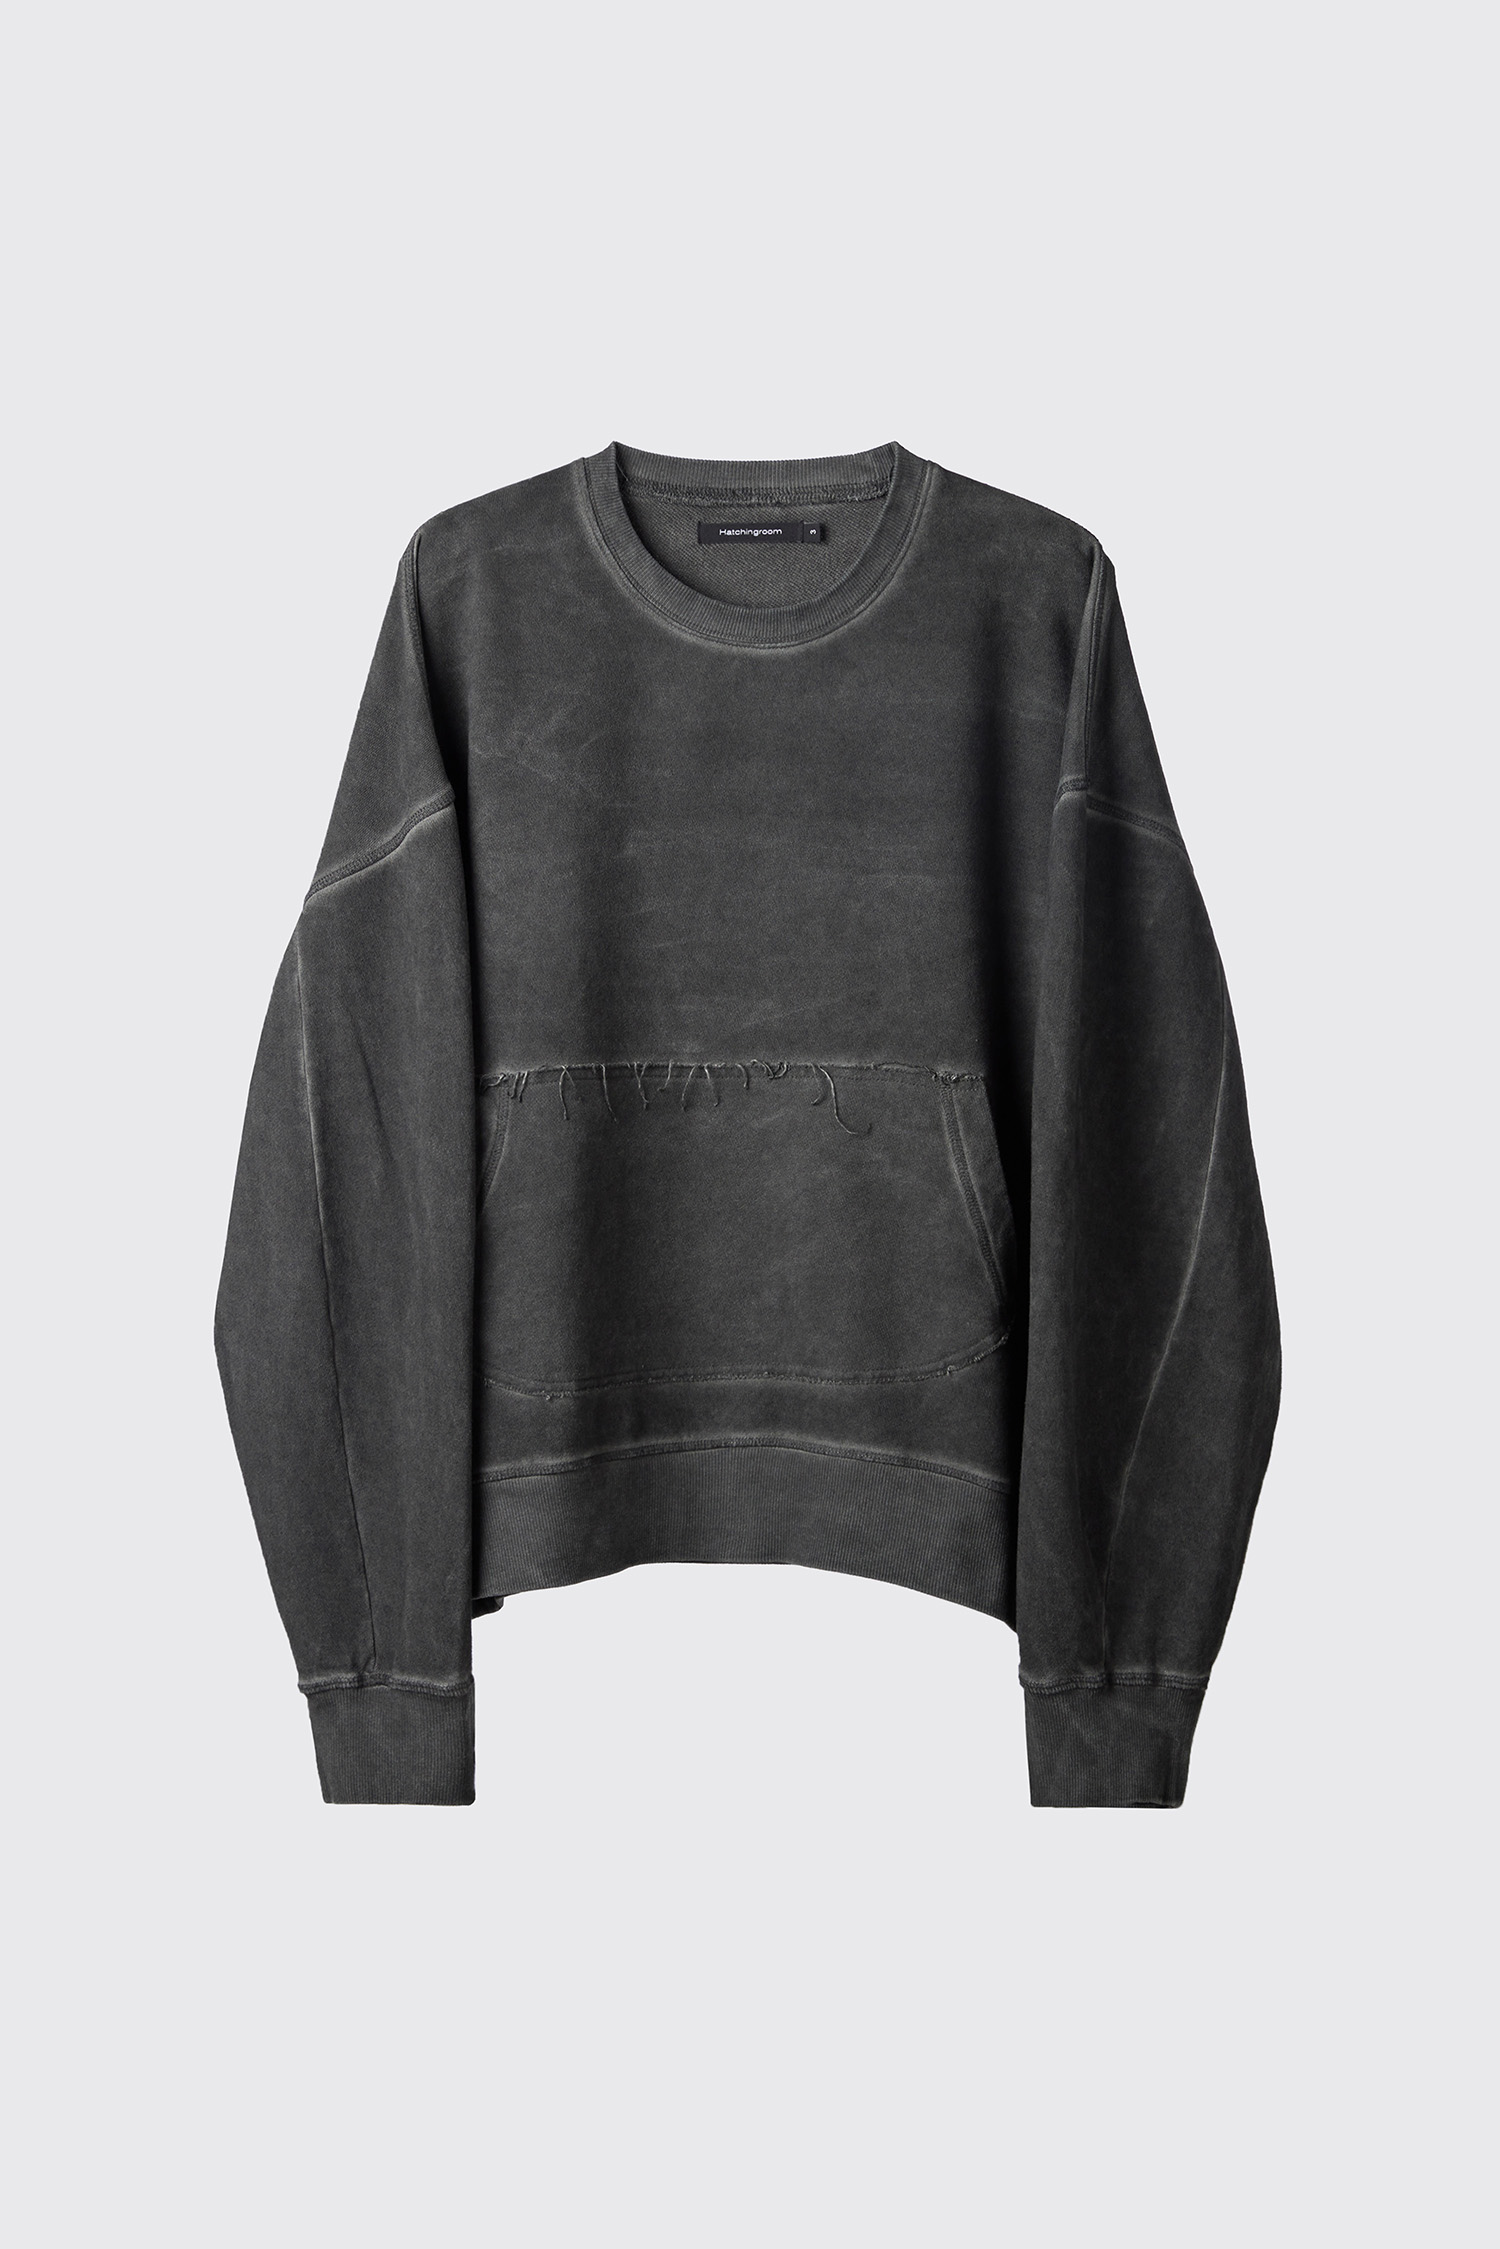 VTG Sweatshirt Dyed Black